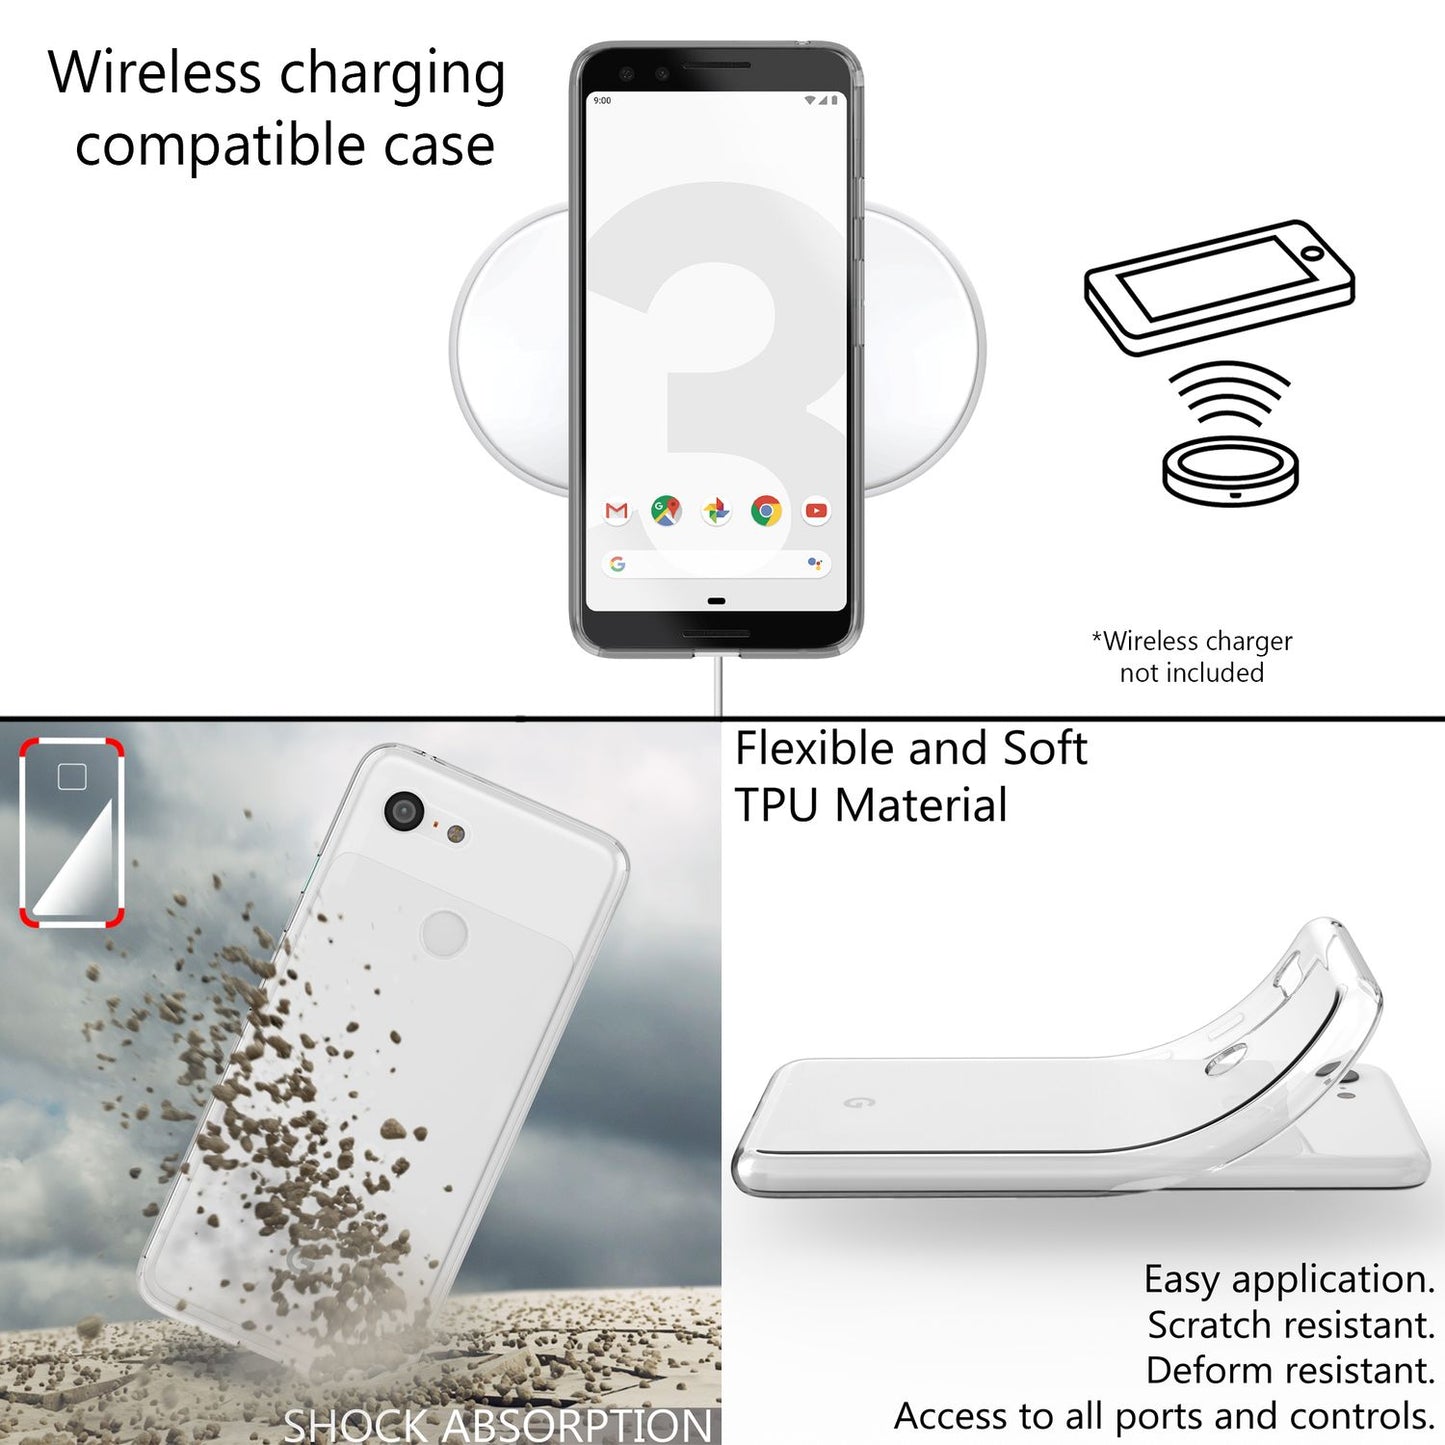 NALIA Handy Hülle für Google Pixel 3, Dünnes TPU Silikon Case Cover Bumper Etui